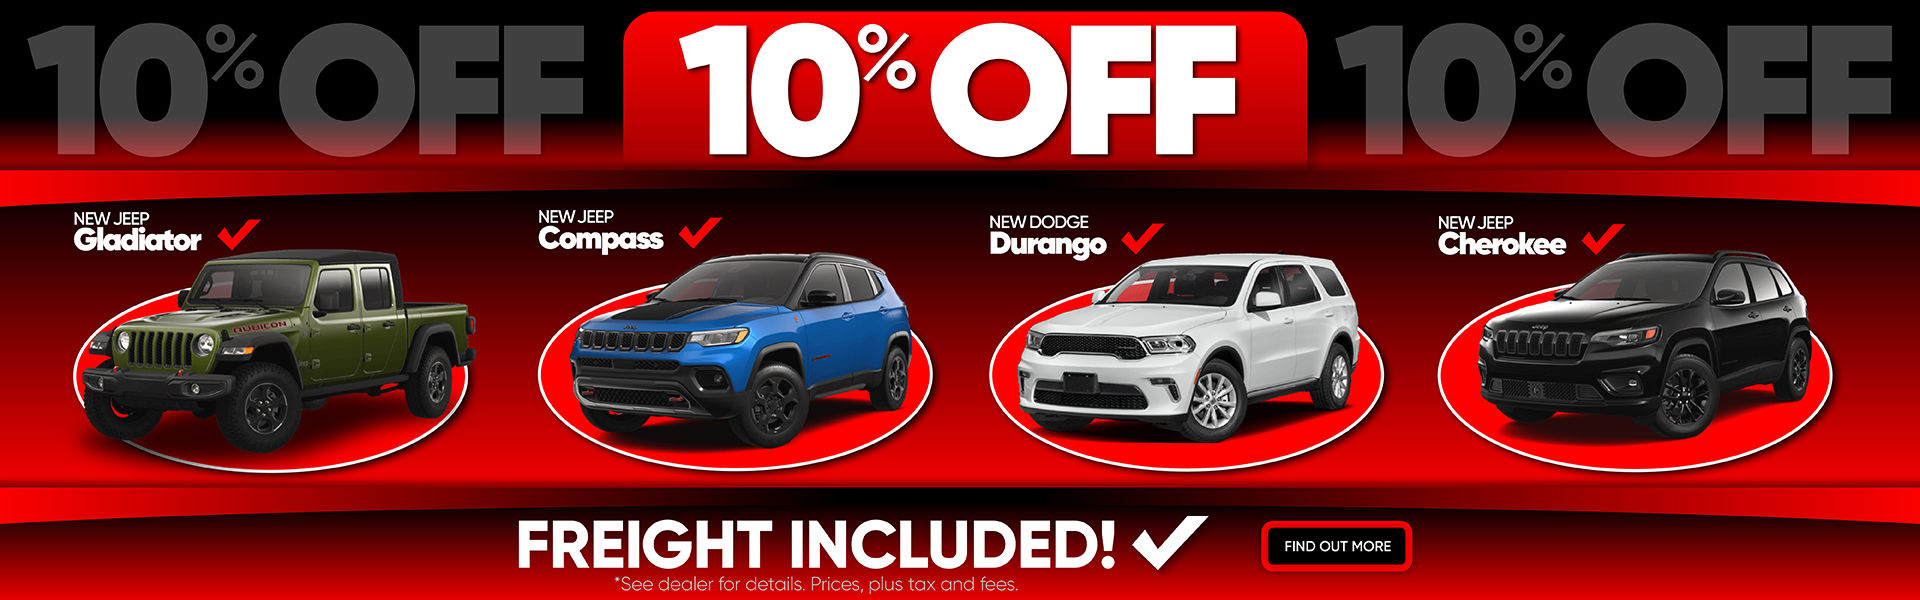 Get 10% off New Jeep Gladiator, Compass, Cherokee, and Dodge Durango